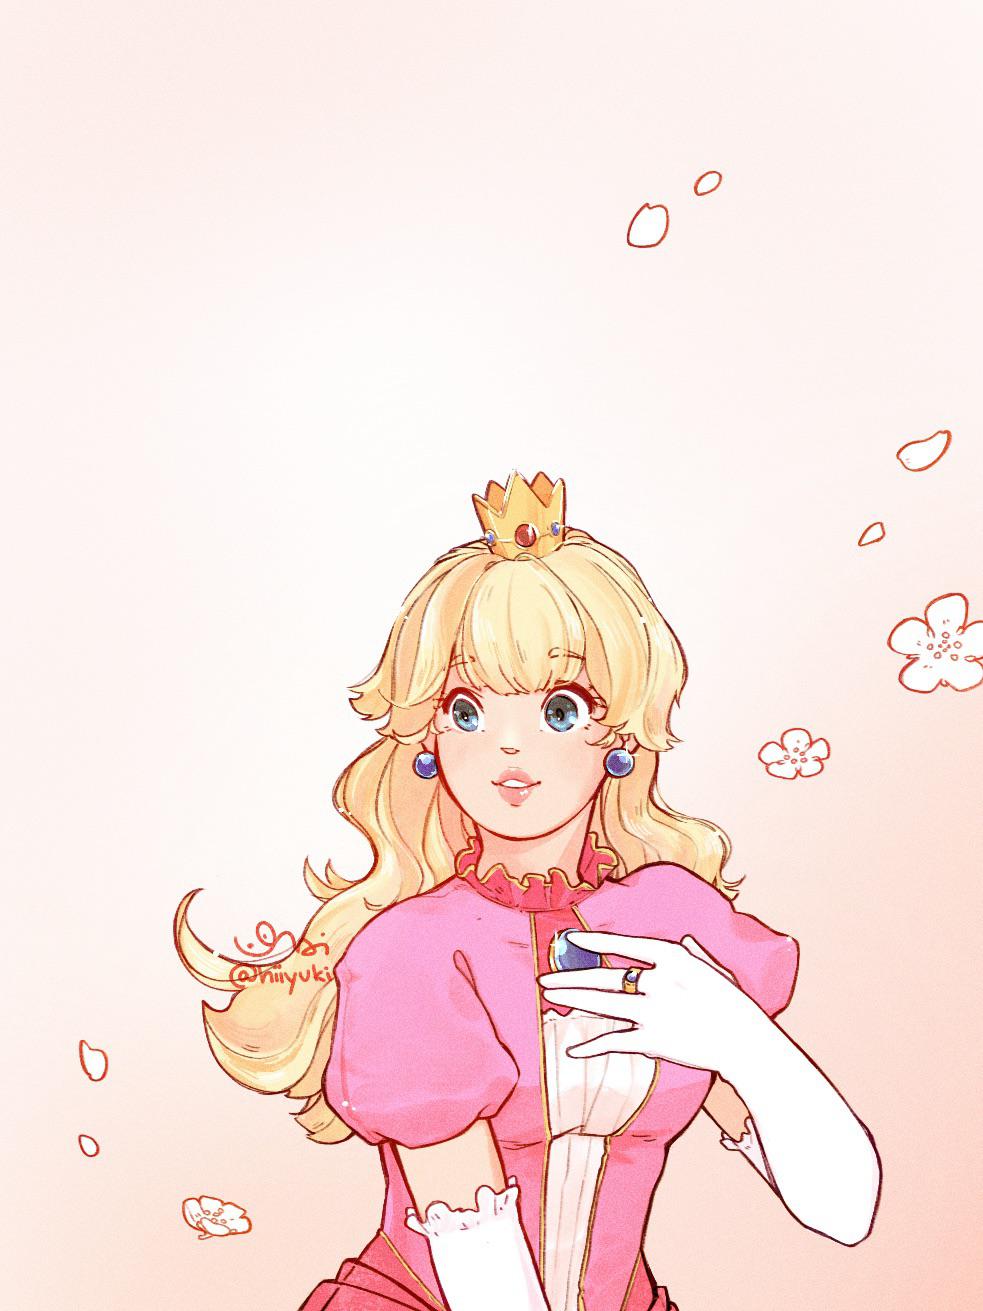 I have drawn princess peach :)